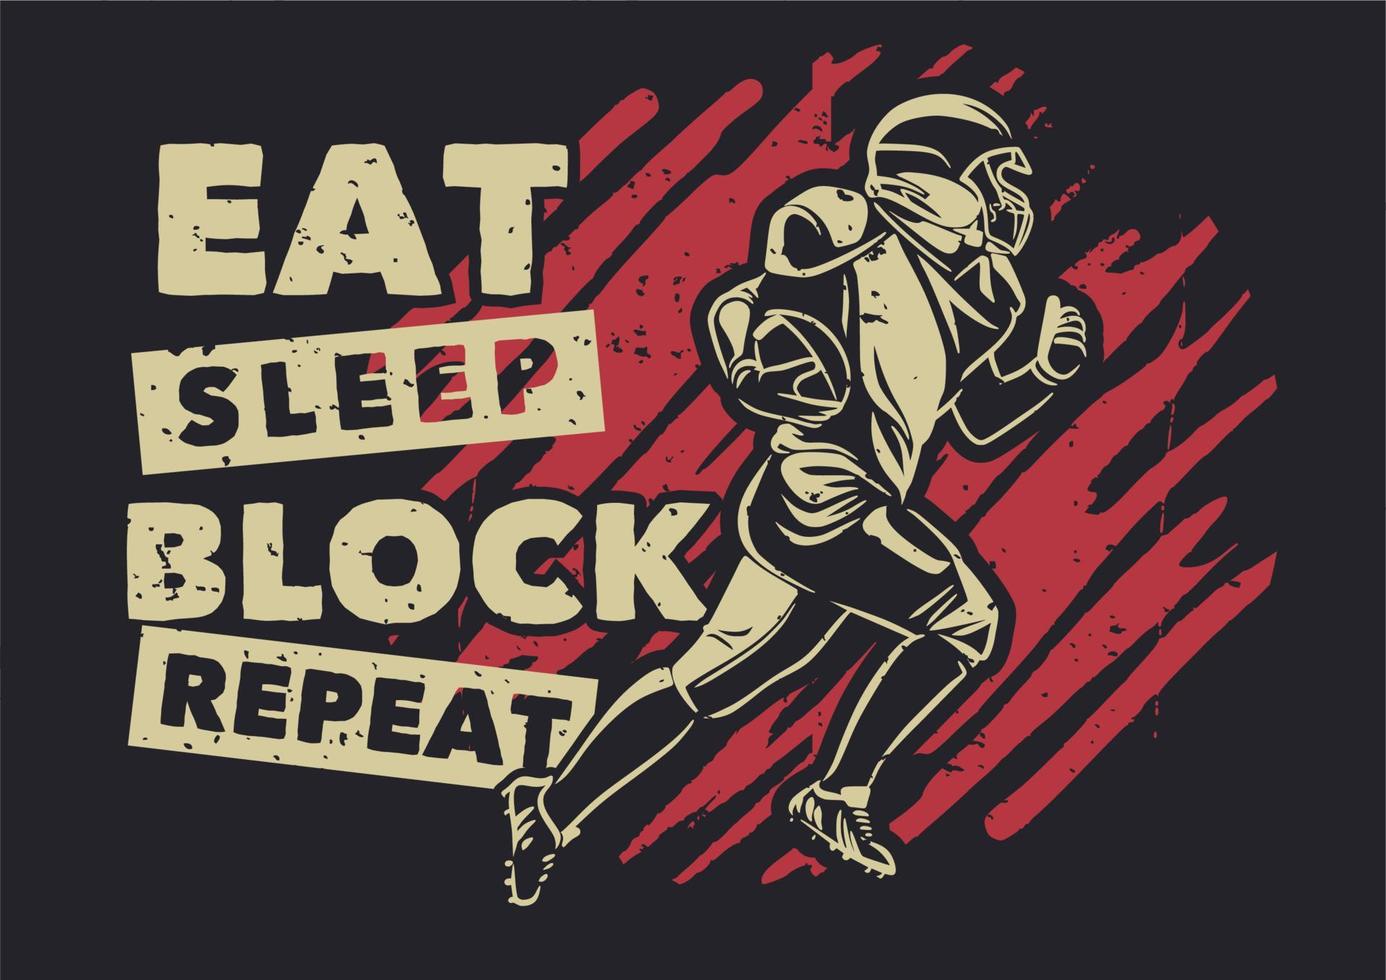 t shirt design eat sleep block repeat wit american football player running vintage illustration vector